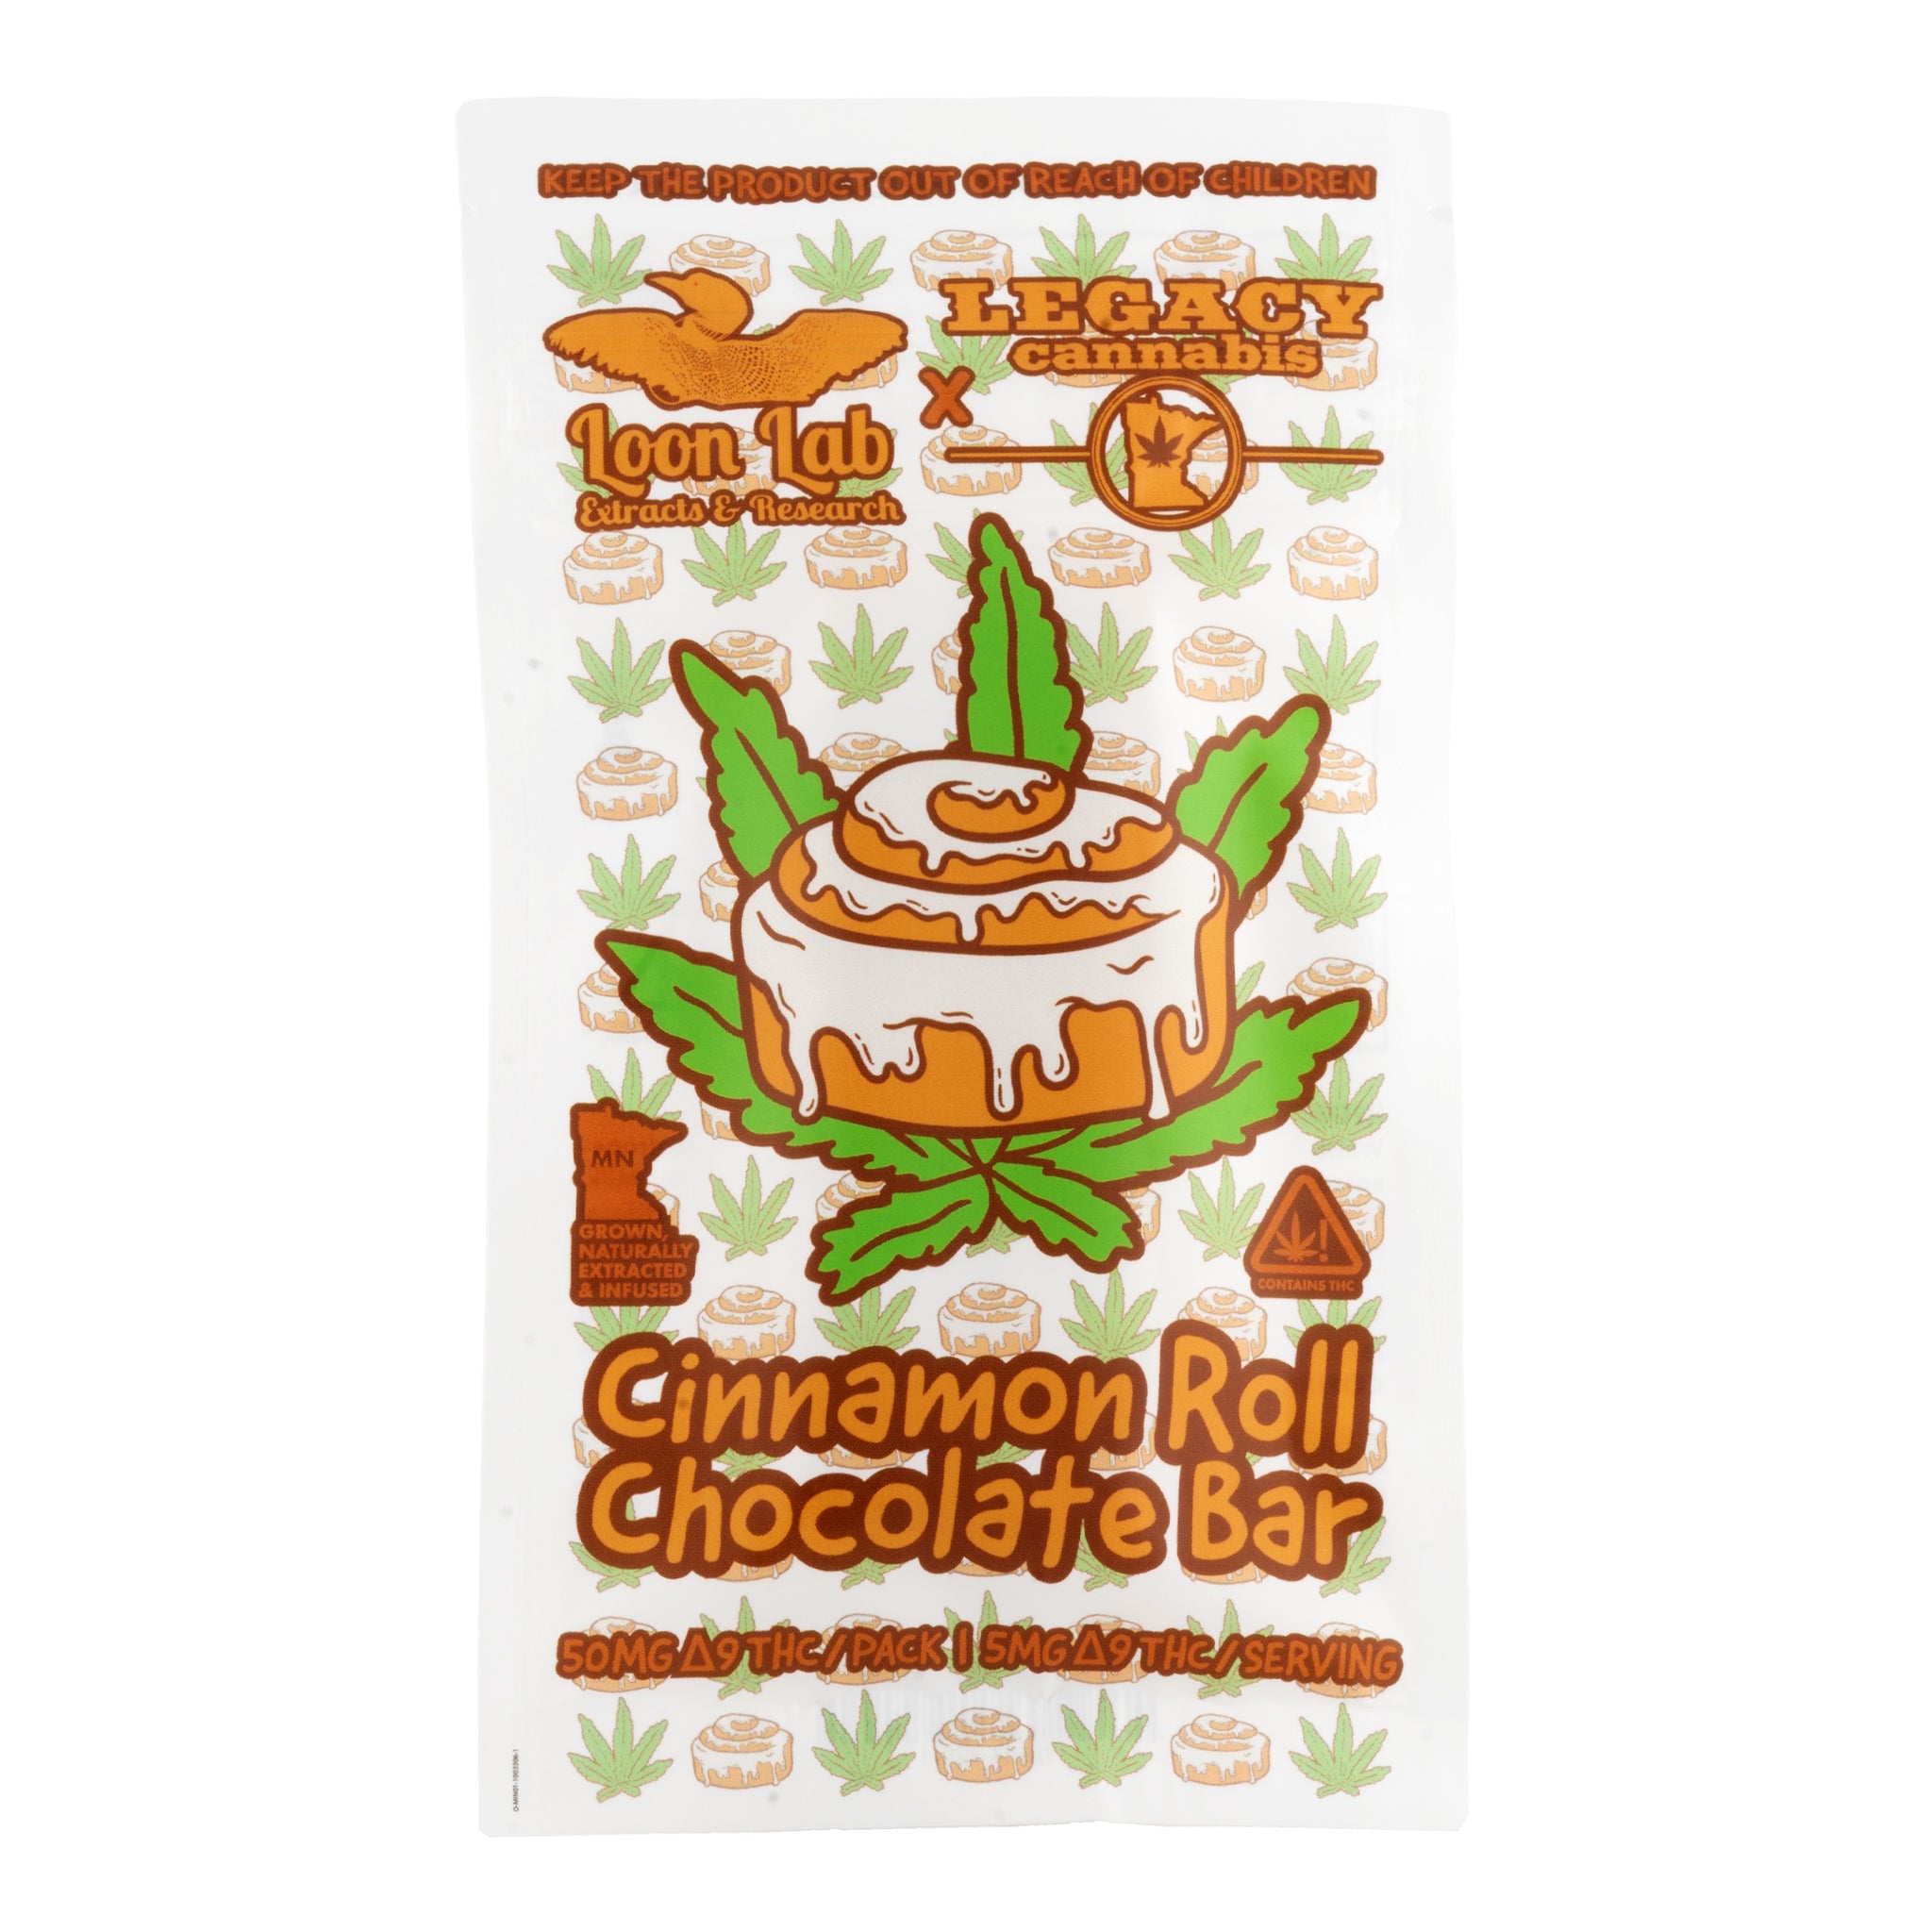 LOON LAB x LEGACY Cinnamon Roll Chocolate Bar 50 mg THC